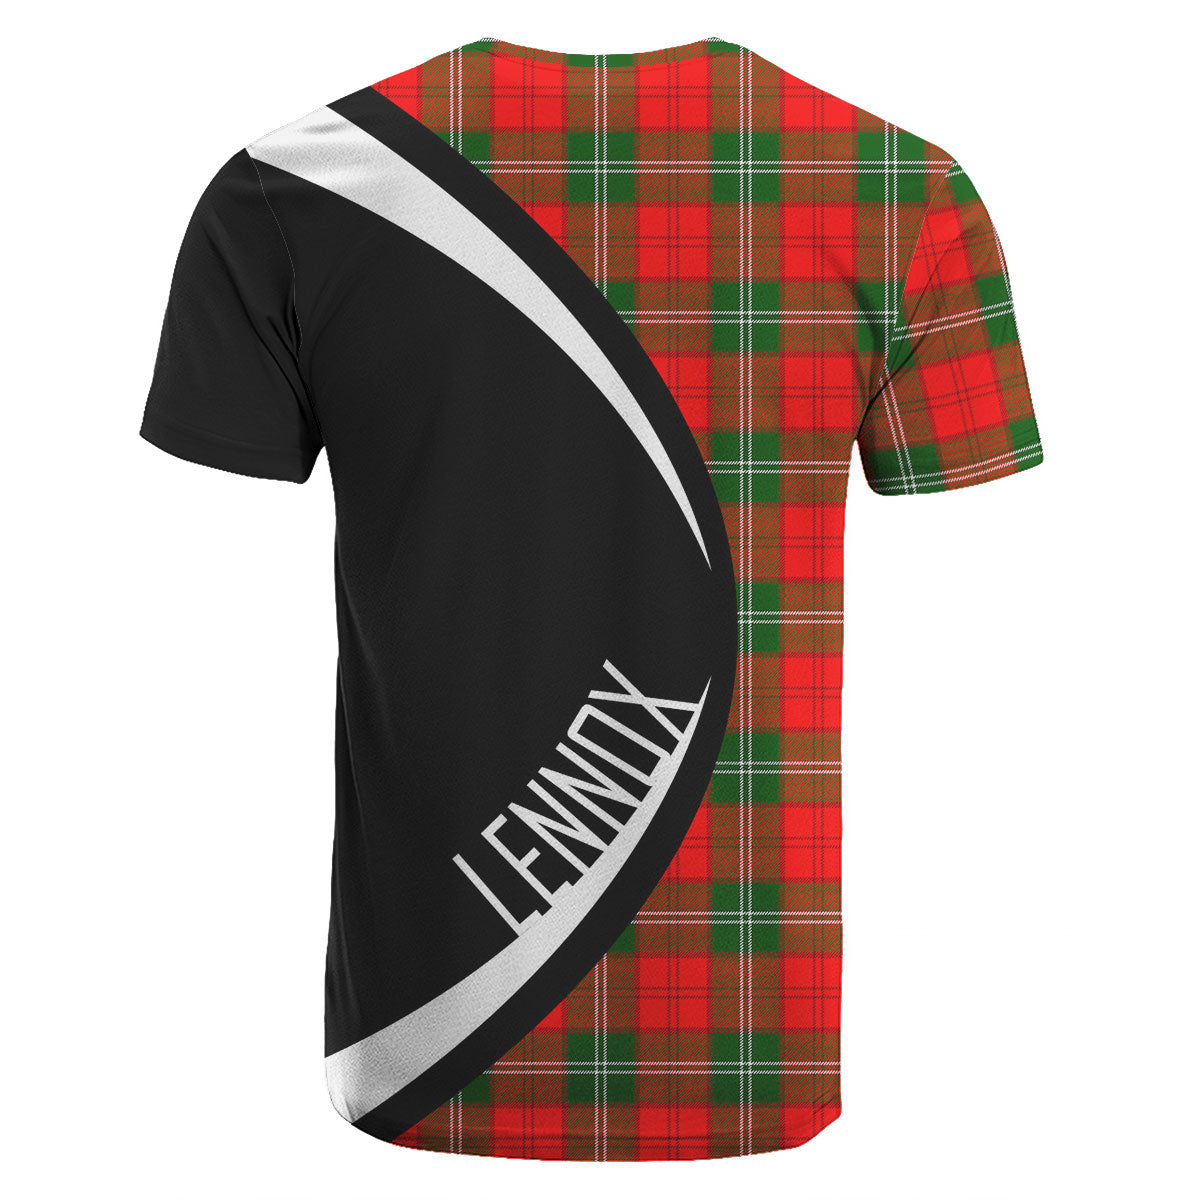 Lennox (Lennox Kincaid) Tartan Crest T-shirt - Circle Style